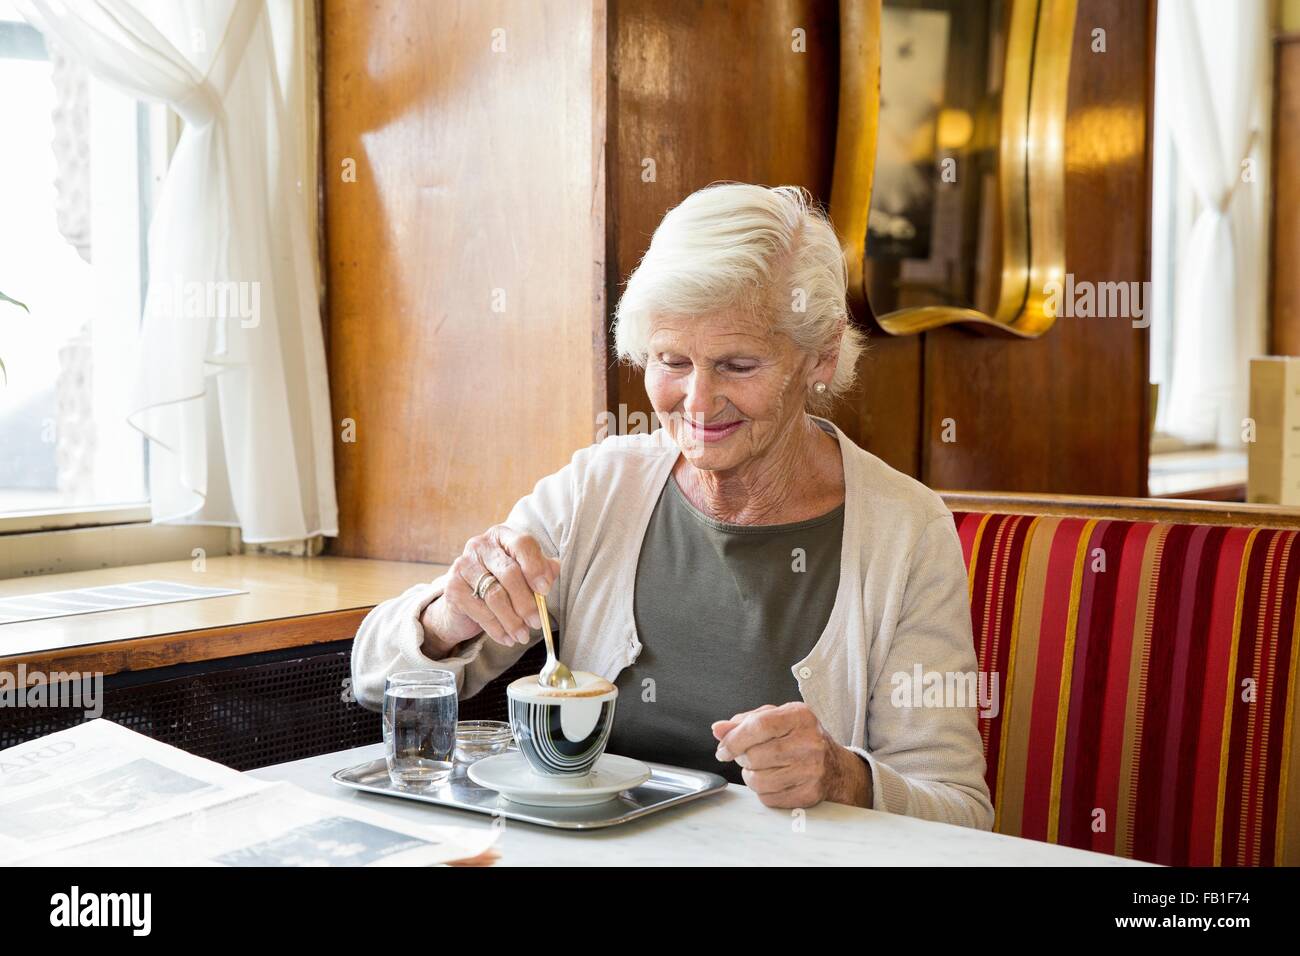 Senior woman sitting in cafe, stirring coffee Stock Photo